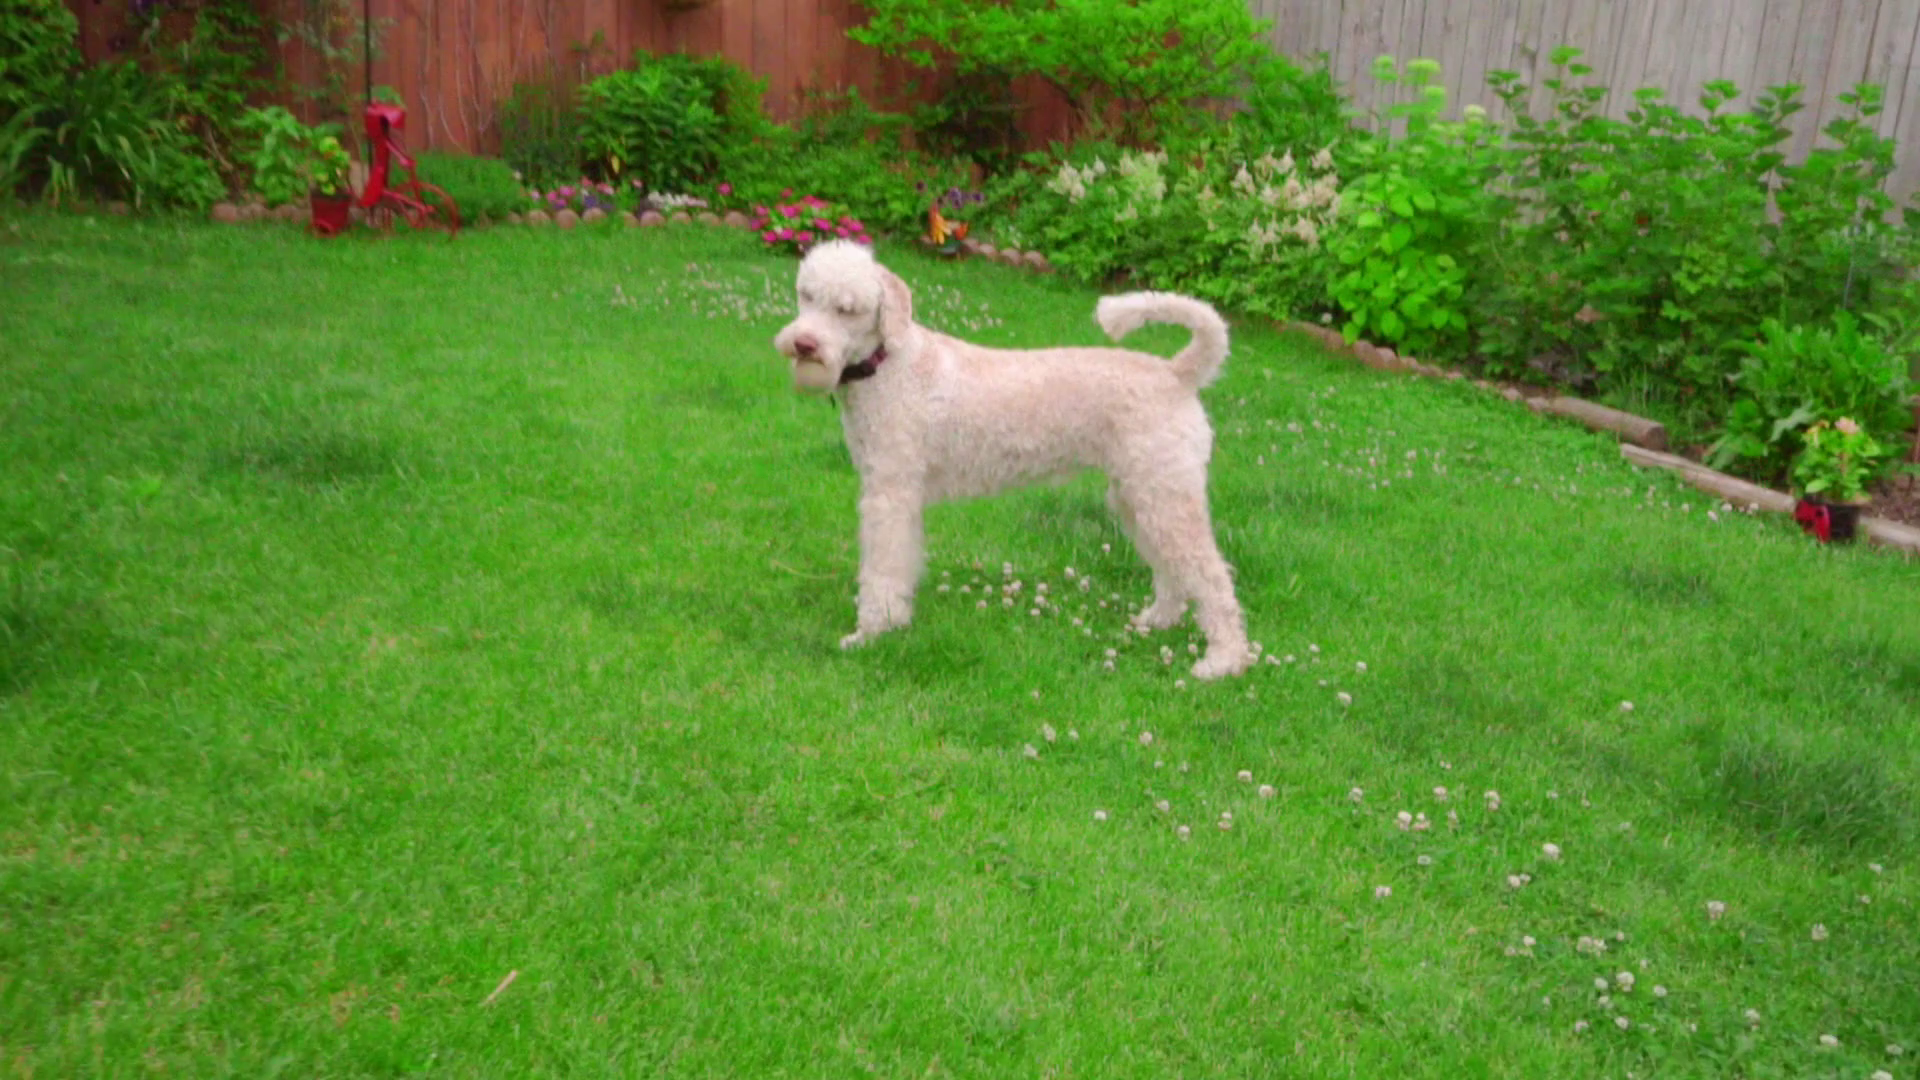 Pov of owner throwing tennis ball to white poodle dog. White dog ...